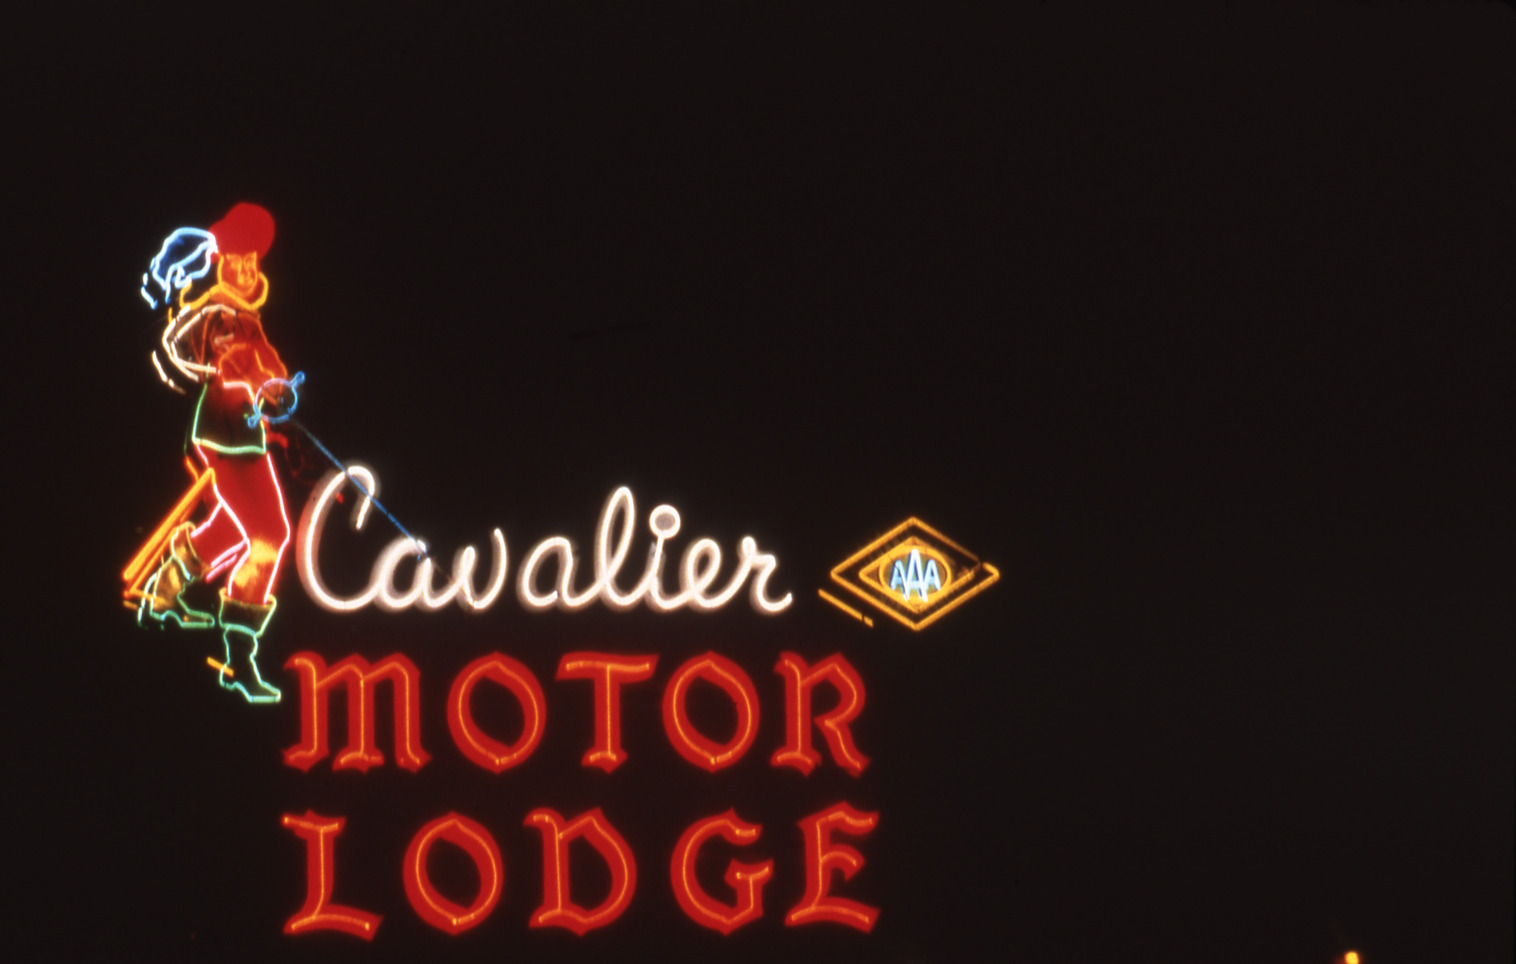 Cavalier Motor Lodge mounted sign, Reno, Nevada: photographic print